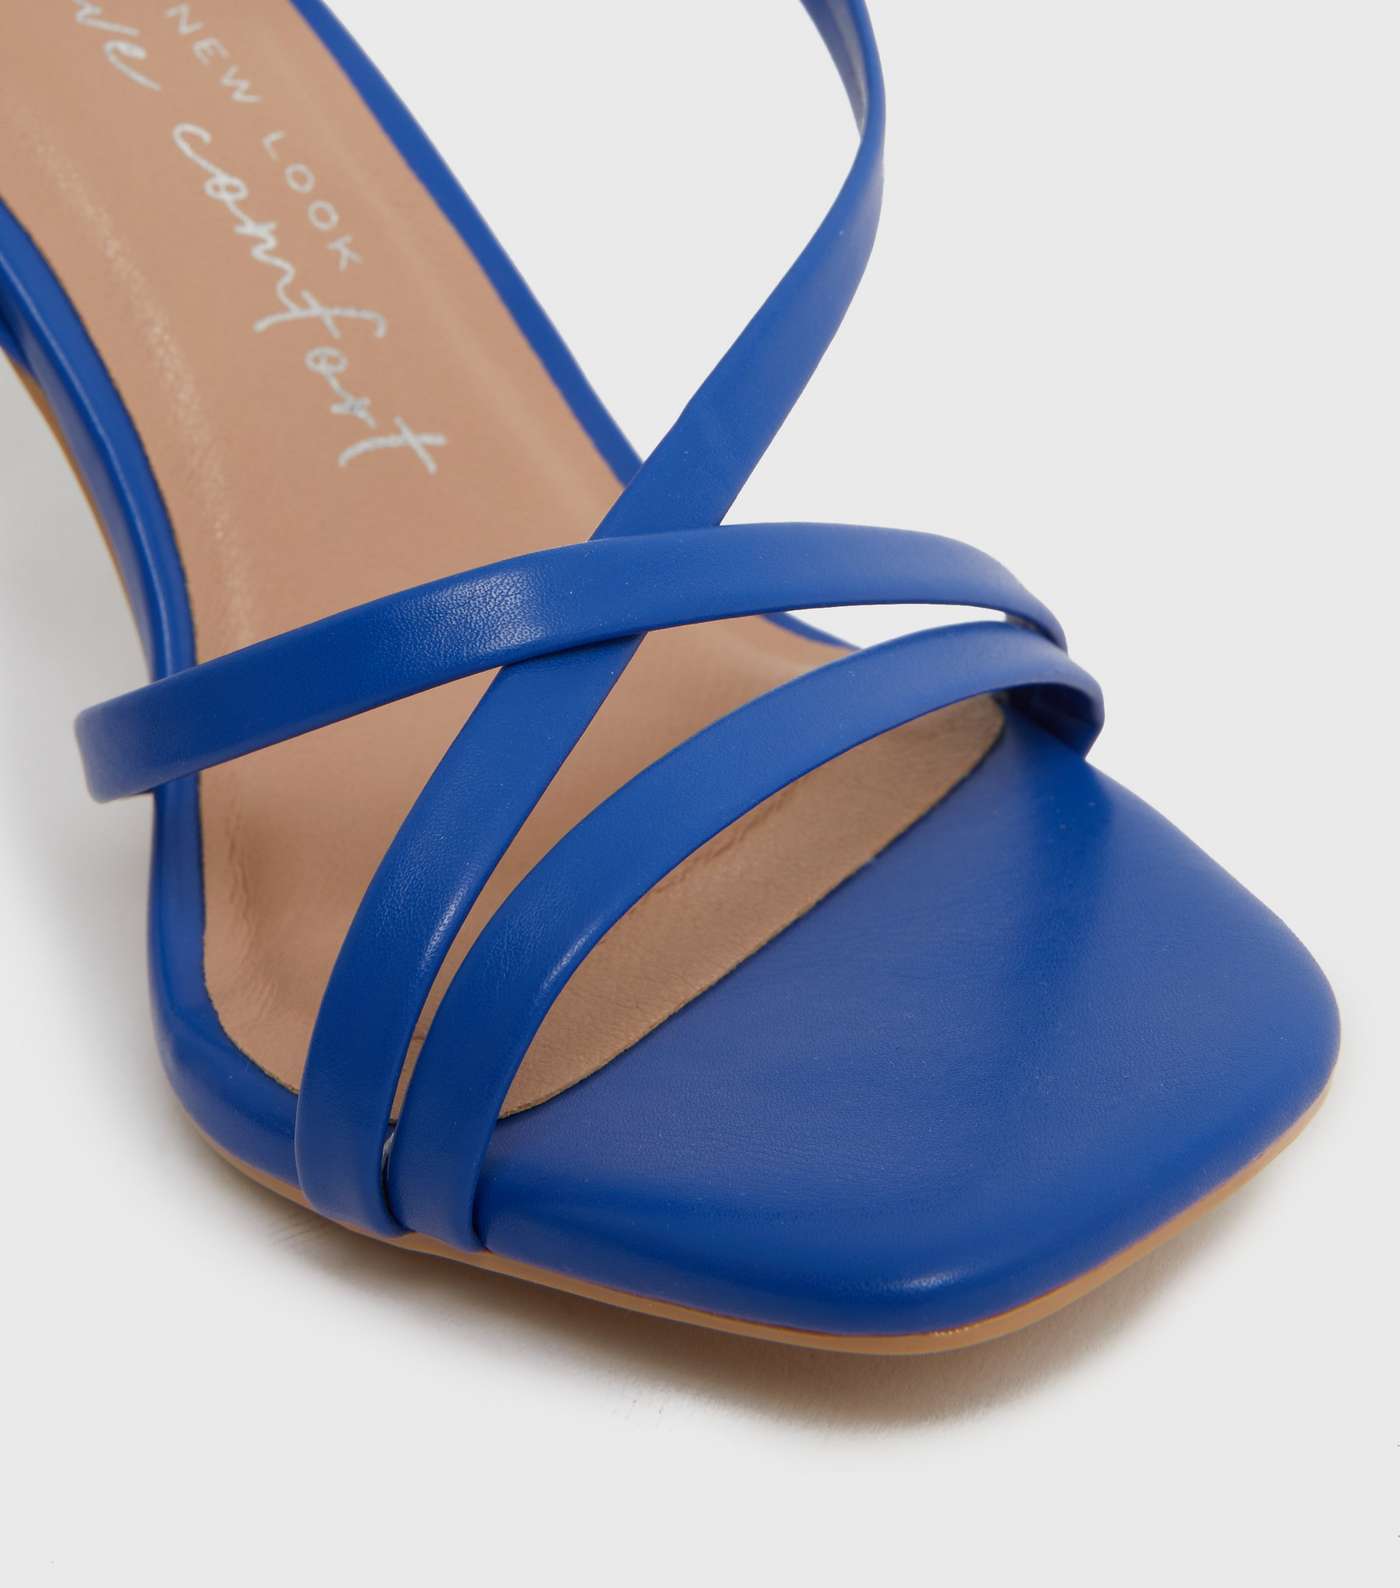 Wide Fit Bright Blue Strappy Stiletto Heel Sandals Image 4